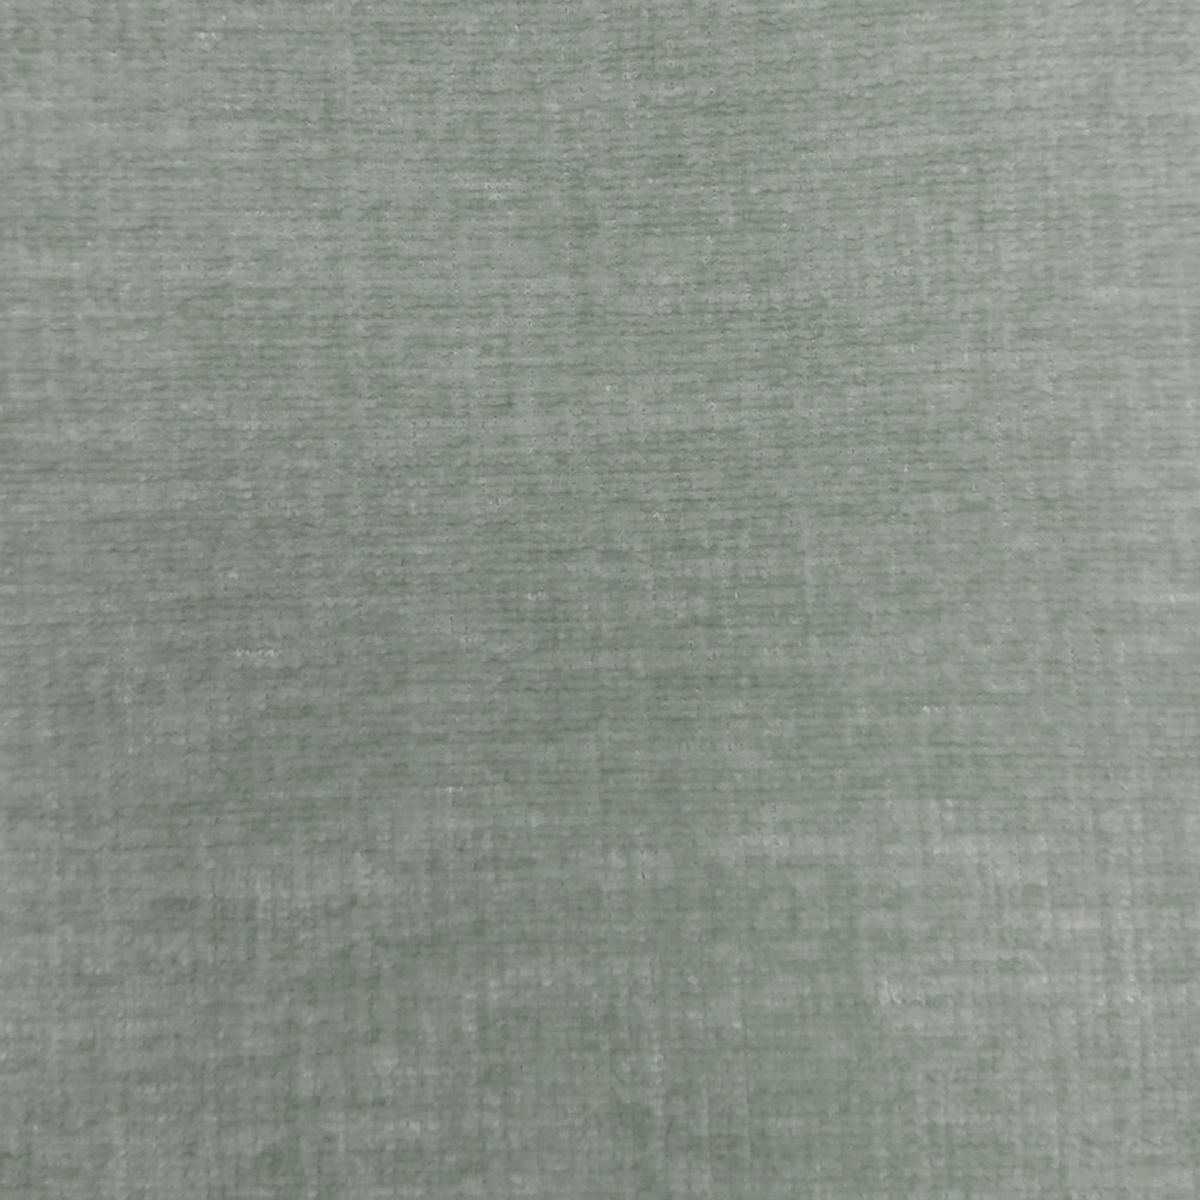 Isernia Mist Velvet Fabric by Voyage Maison